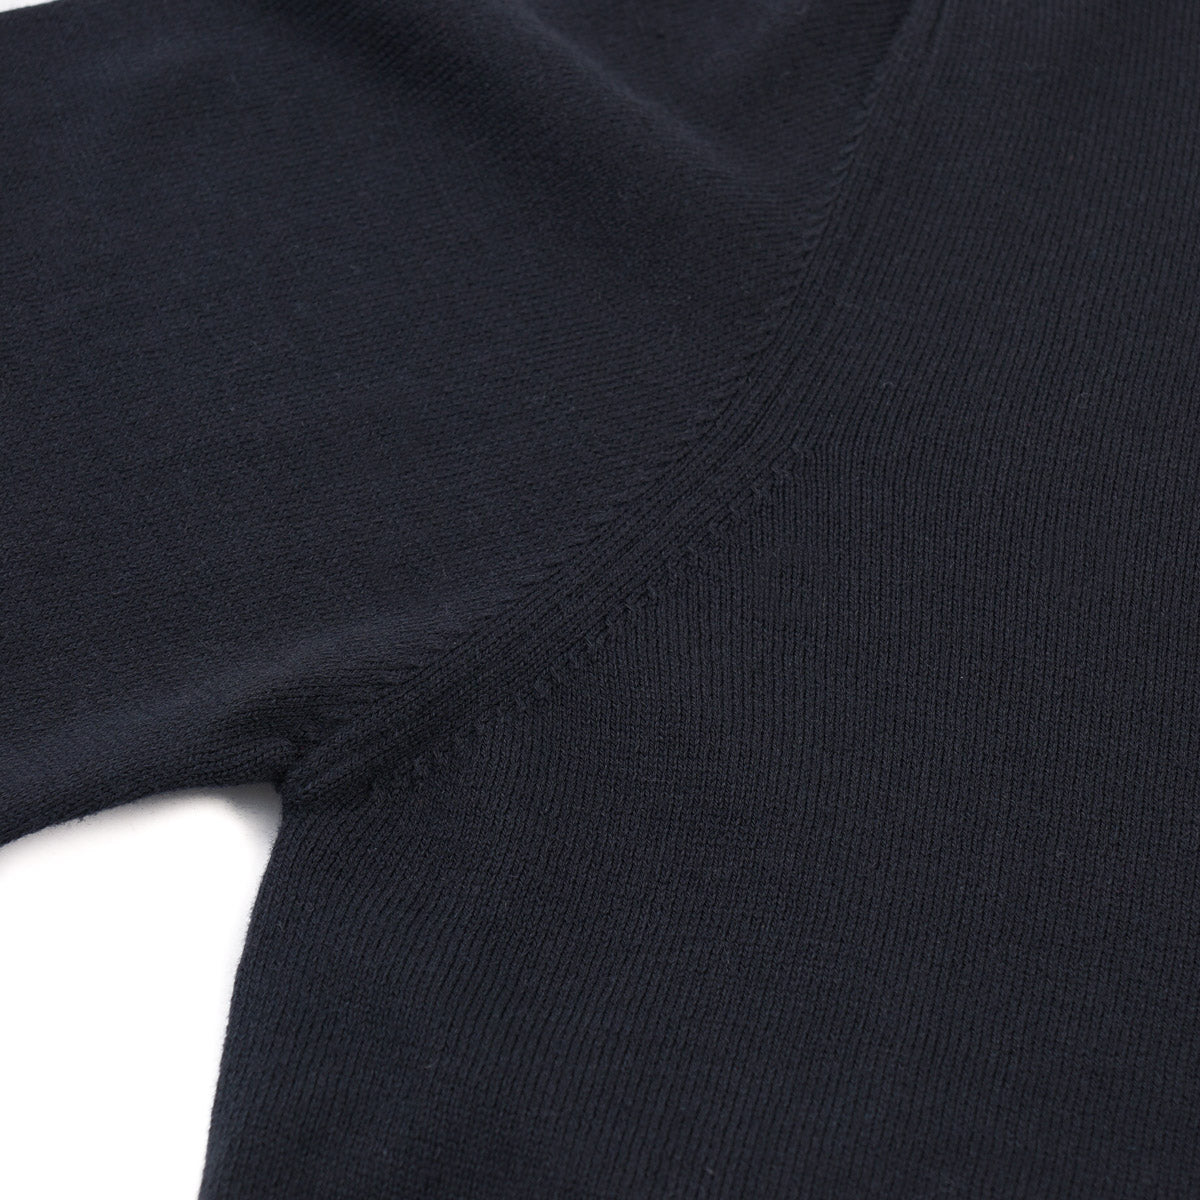 Cruciani Soft Knit Cotton Sweater - Top Shelf Apparel